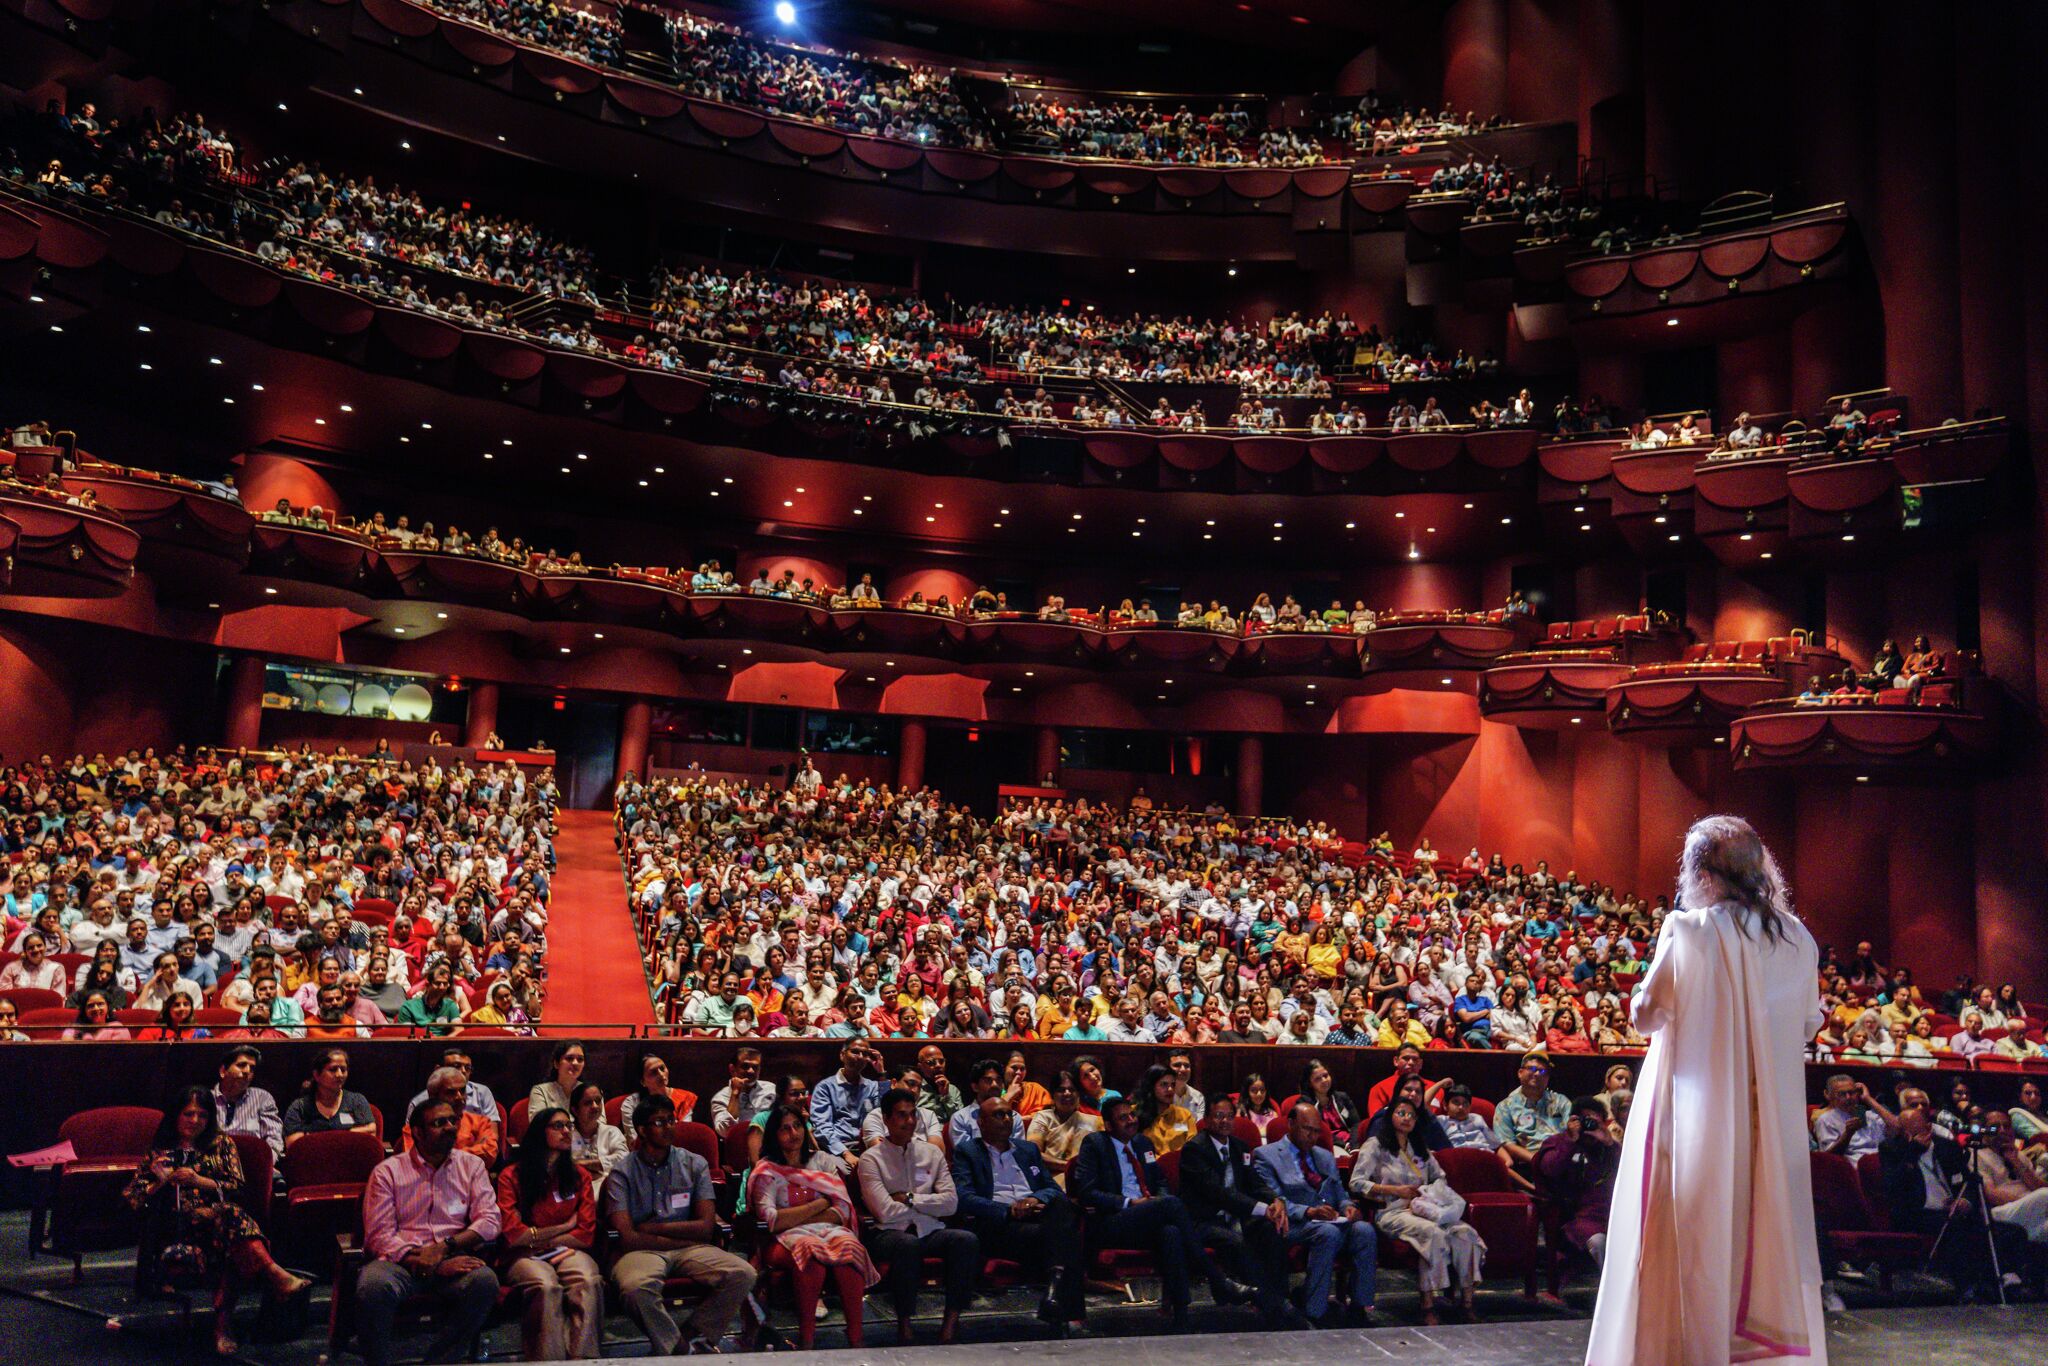 Houston meditation event at Wortham Theatre draws thousands